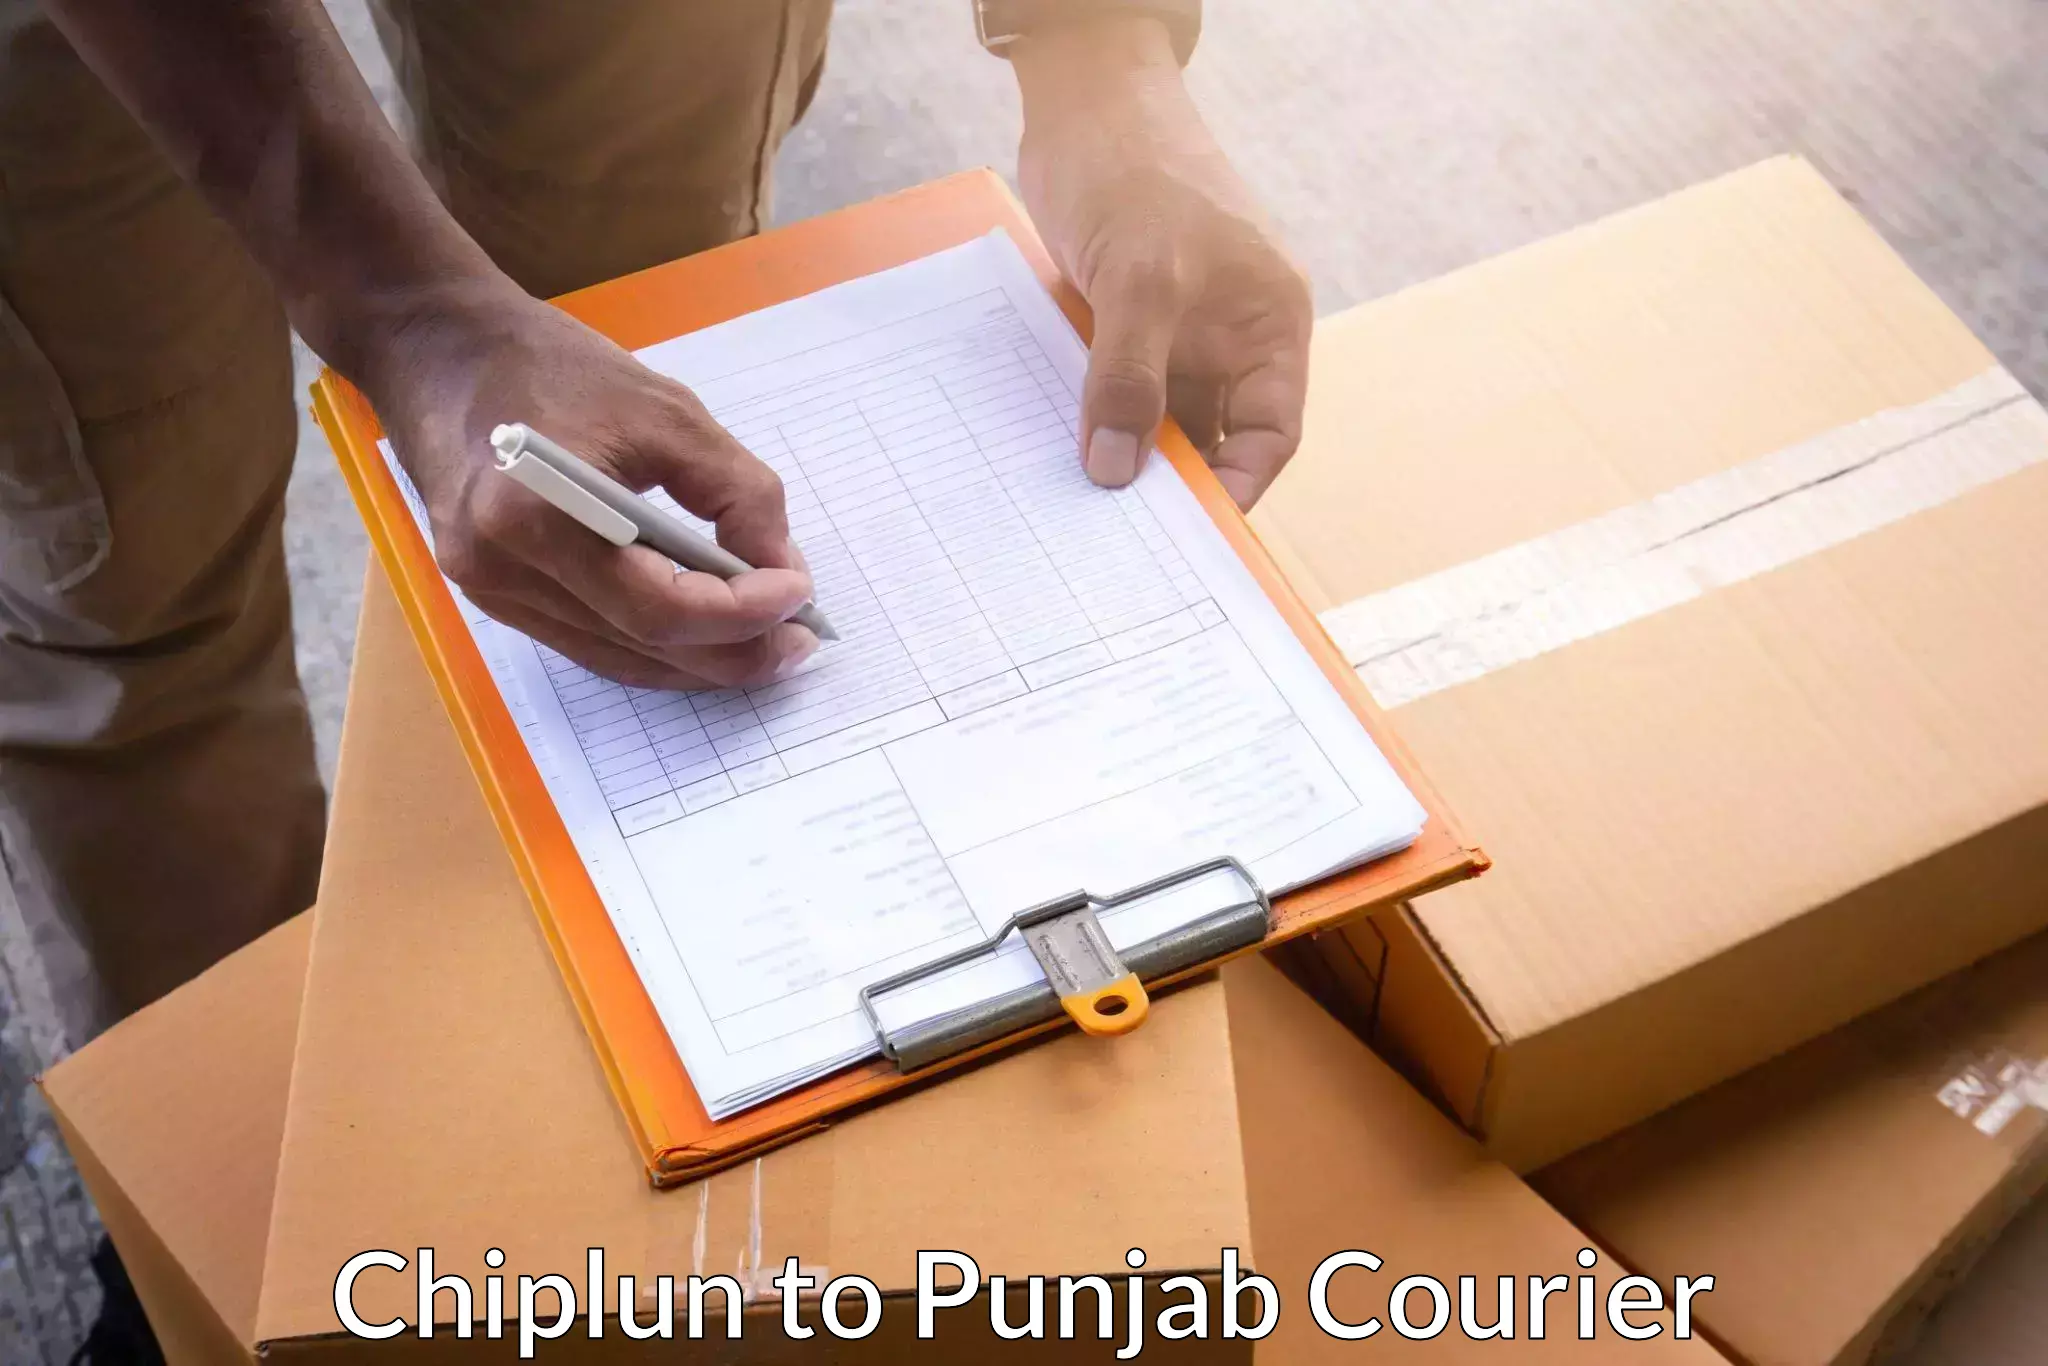 Doorstep delivery service Chiplun to Punjab